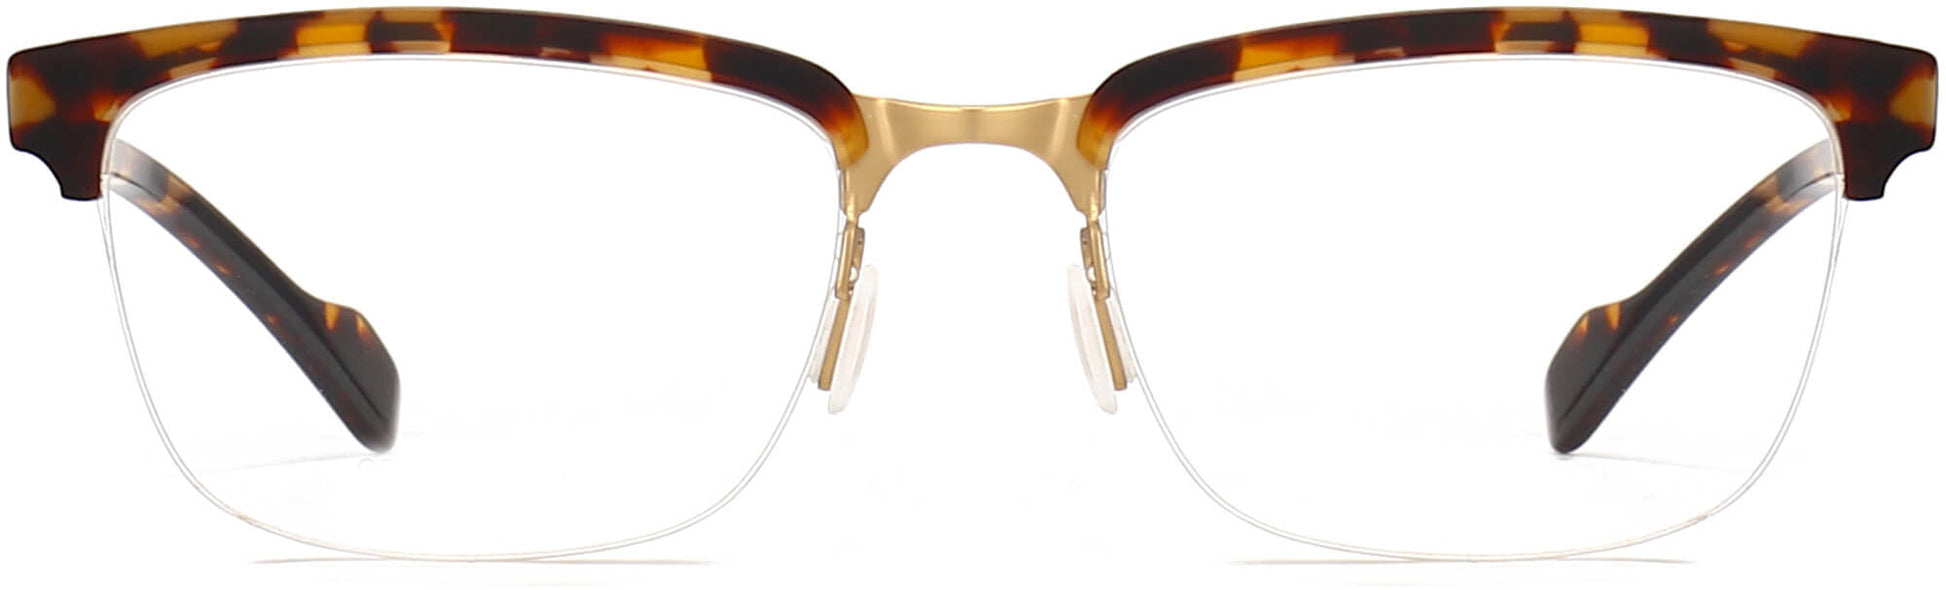 Sarai Browline Tortoise Eyeglasses from ANRRI, front view